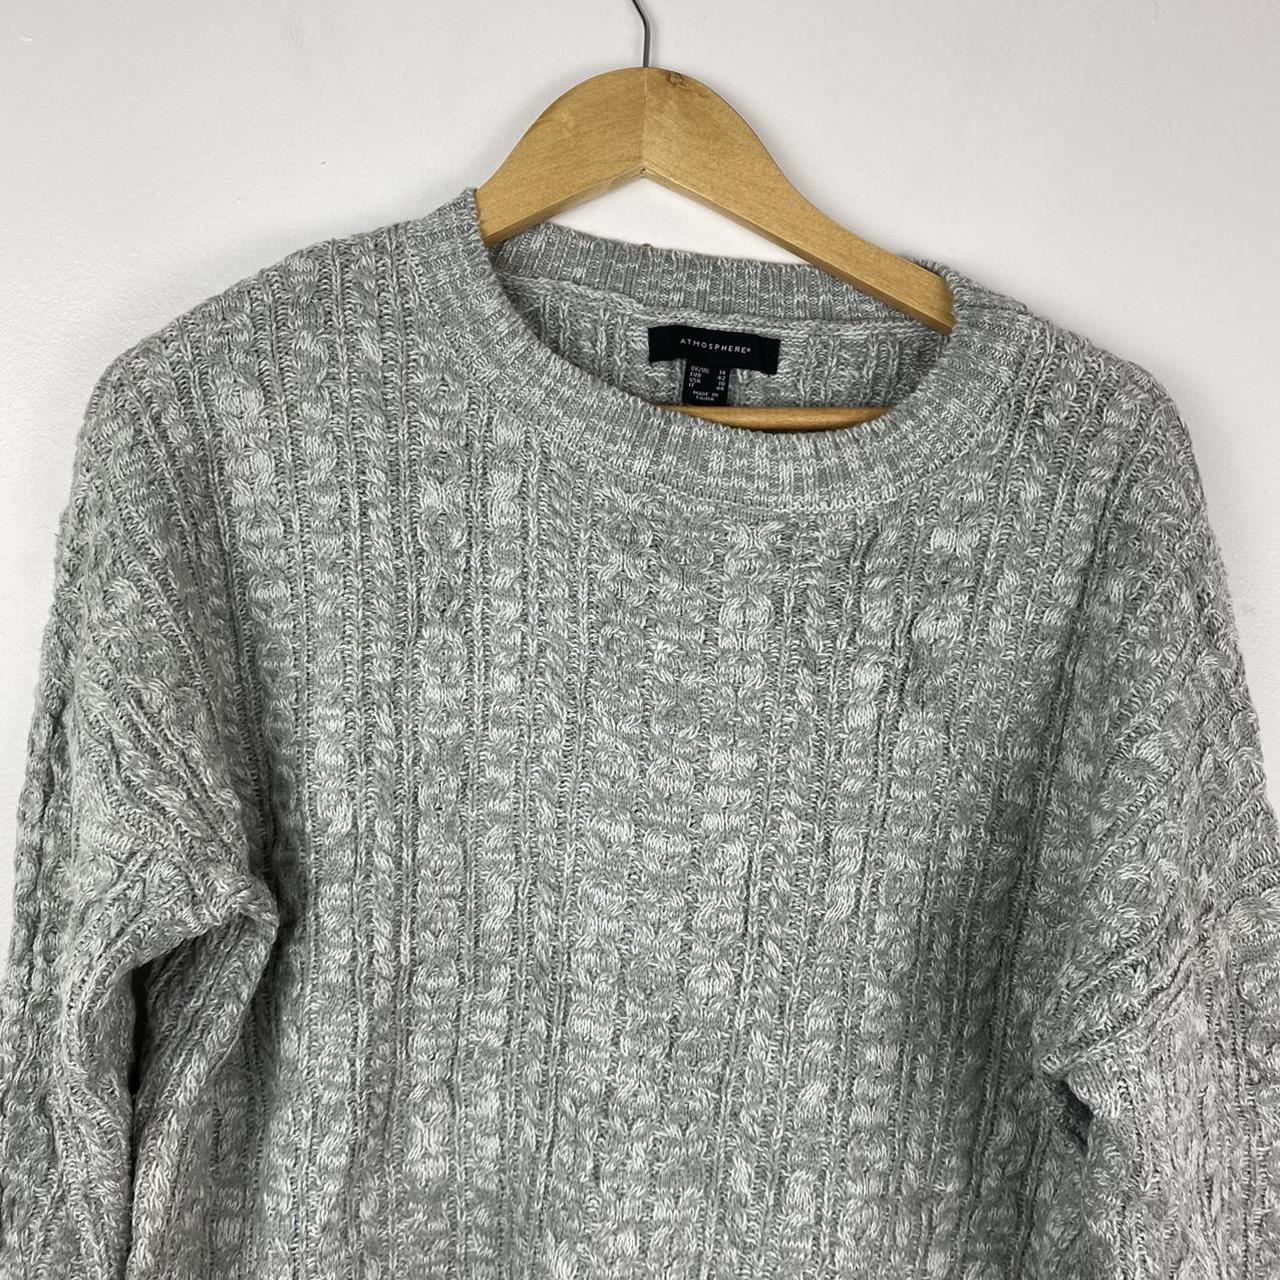 Atmosphere Knitted Sweatshirt Grey Sweater Warm... - Depop